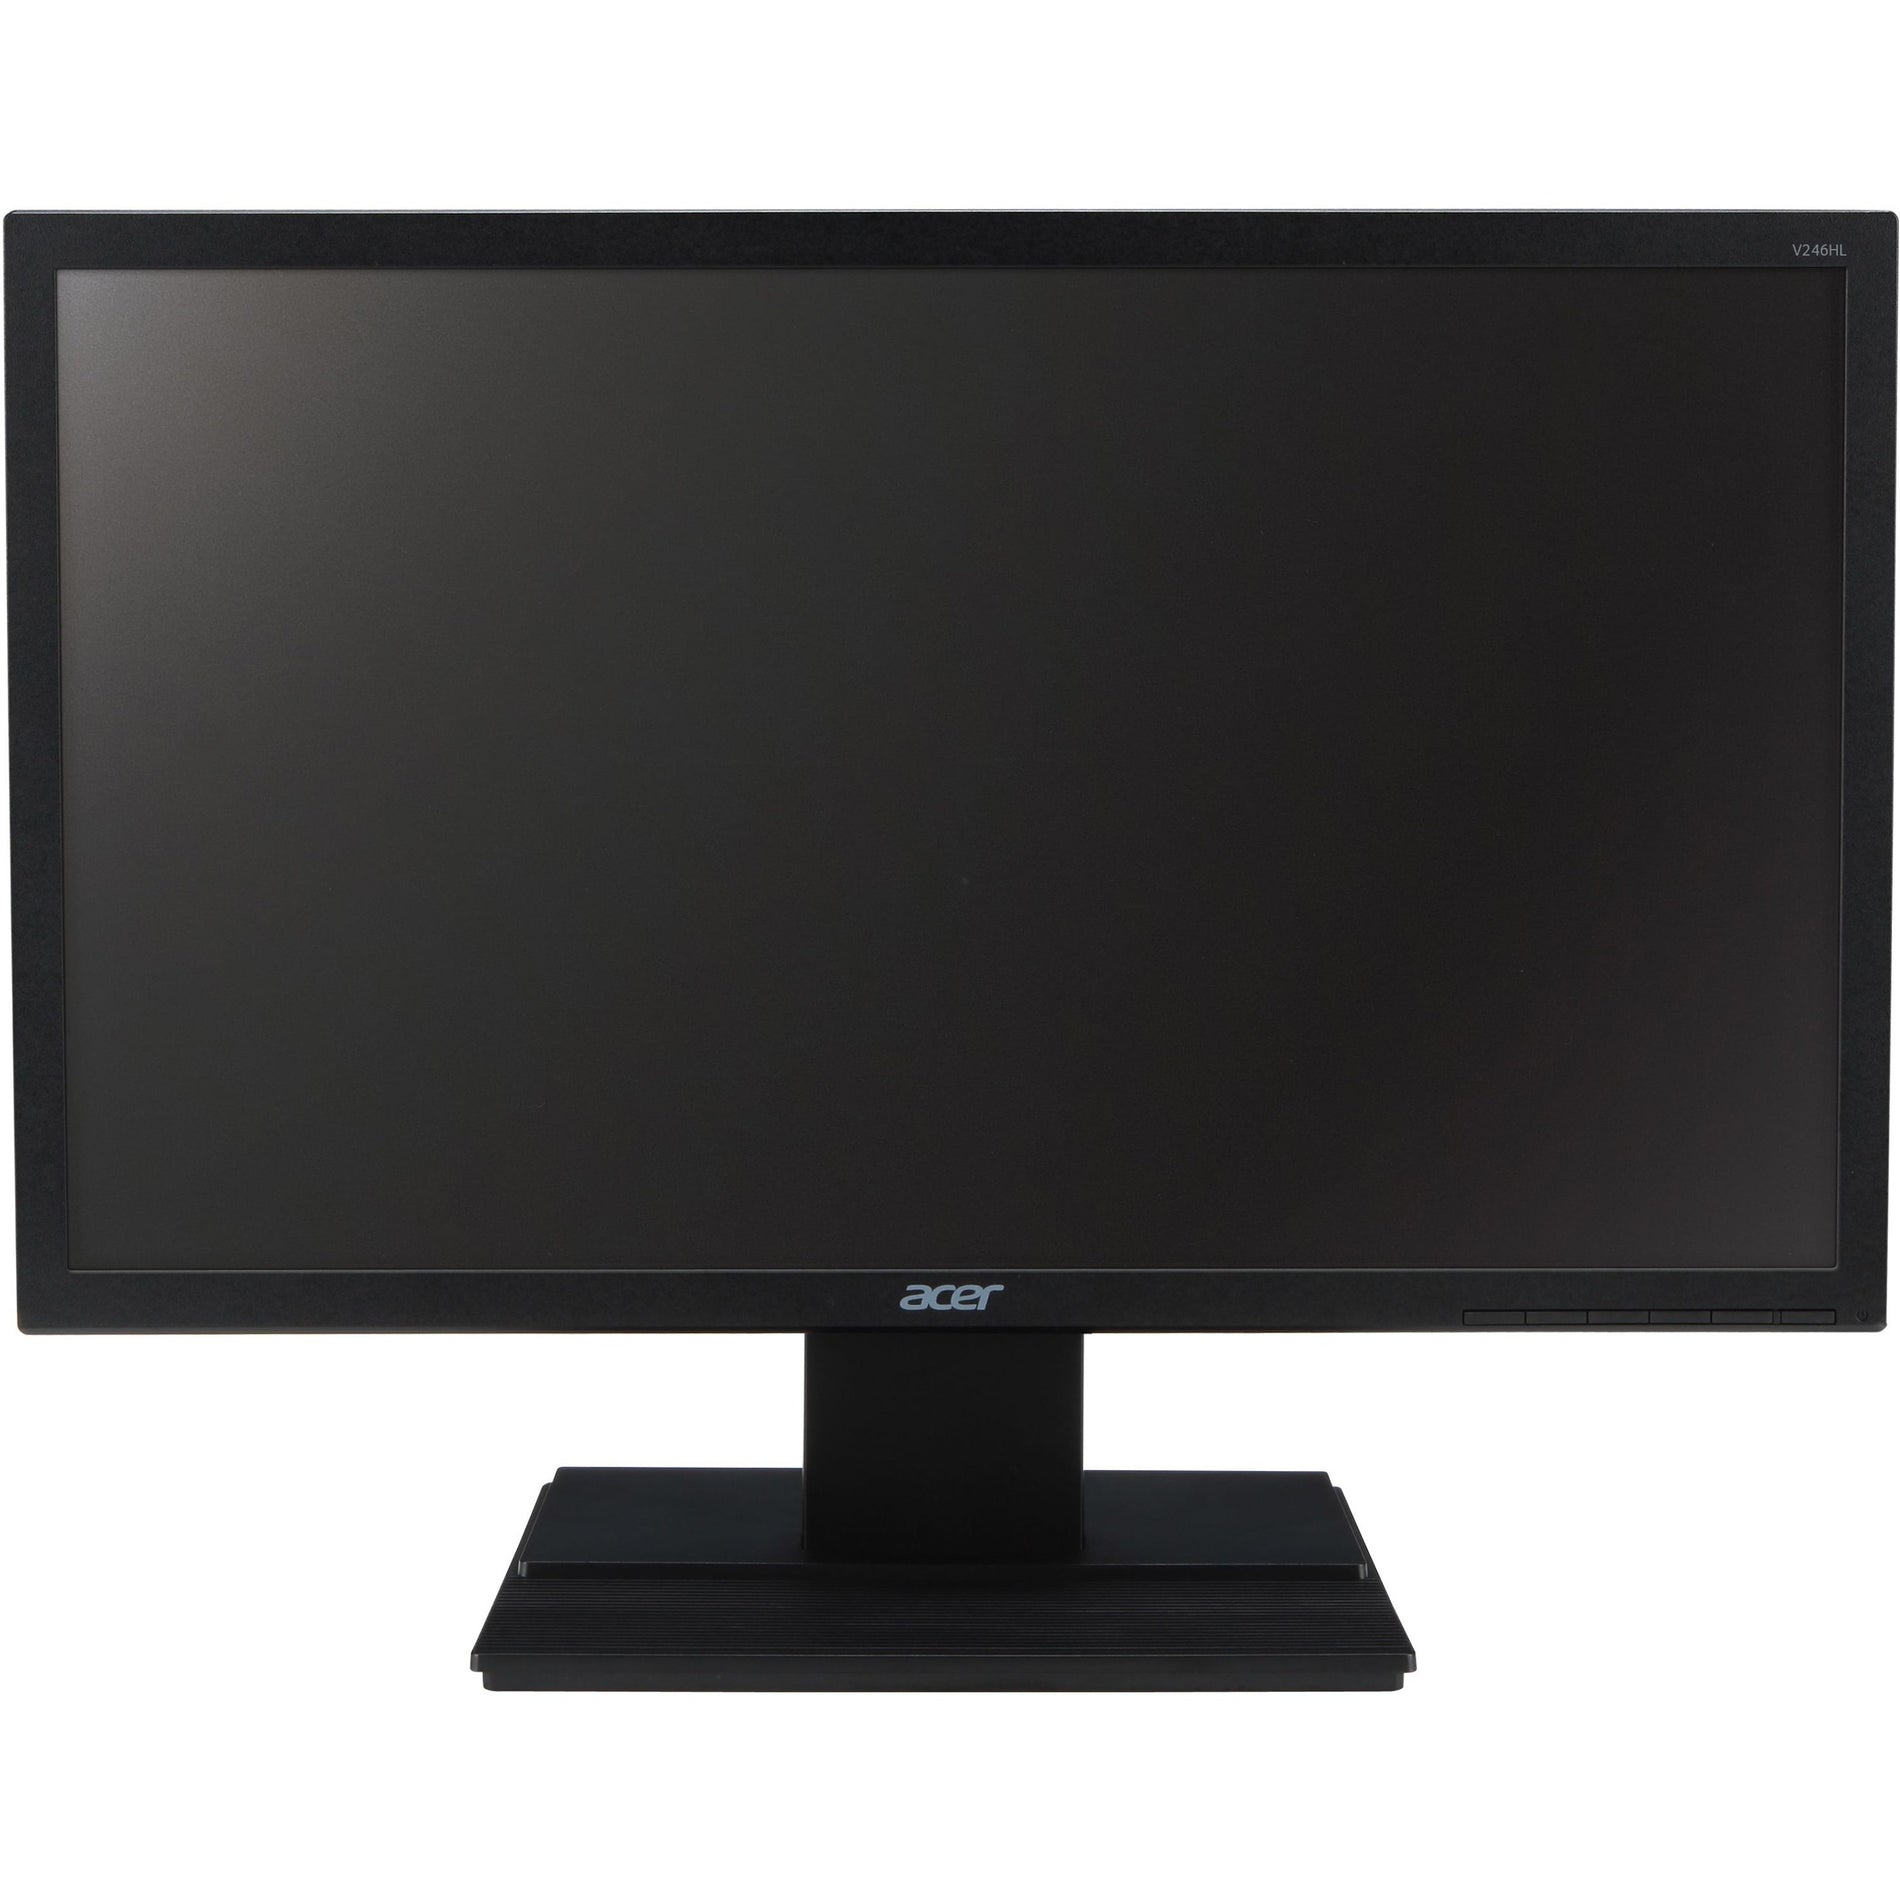 Acer UM.FV6AA.004 V246HL Widescreen LCD Monitor, Full HD, 24", 5ms, 100,000,000:1 Contrast Ratio, 250 Nit Brightness